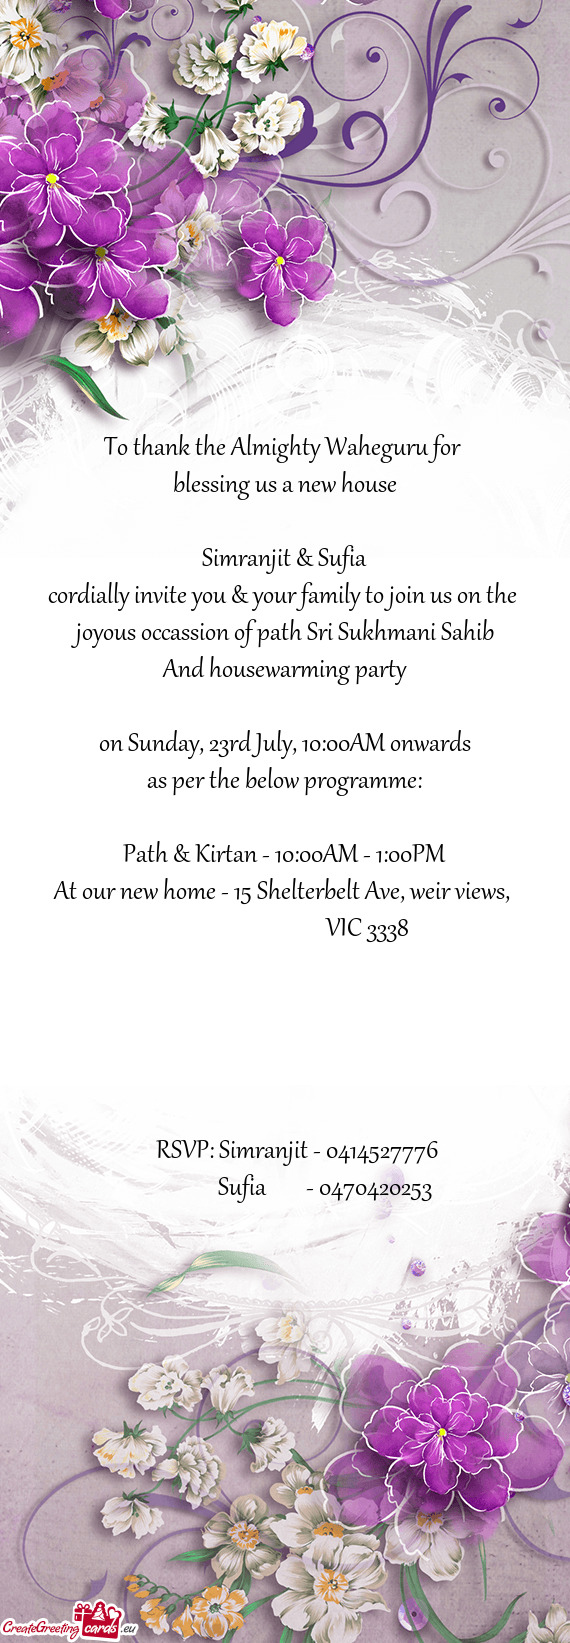 Simranjit & Sufia